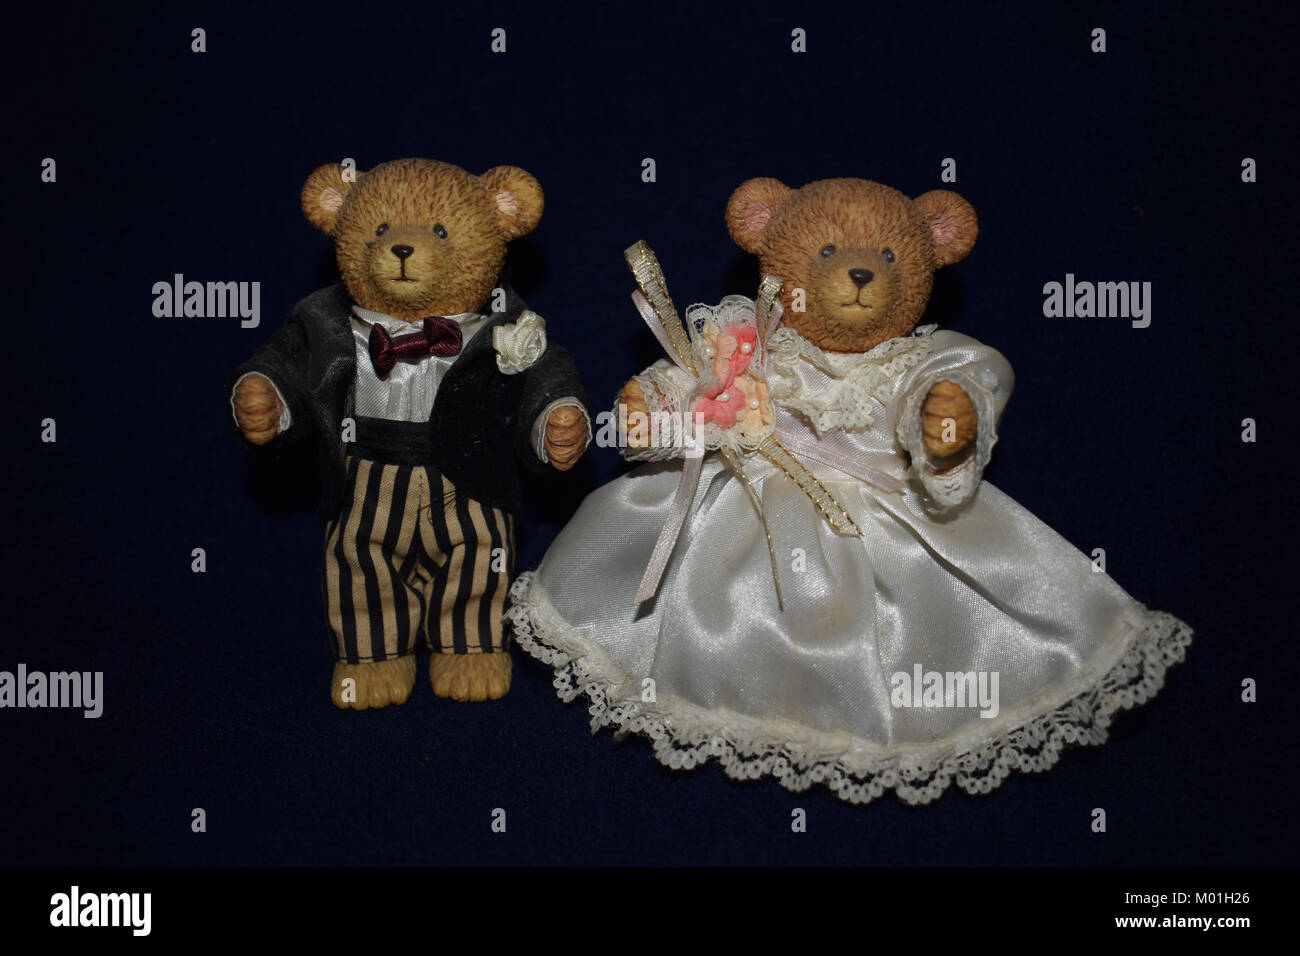 Teddybear statue marriage Stock Photo